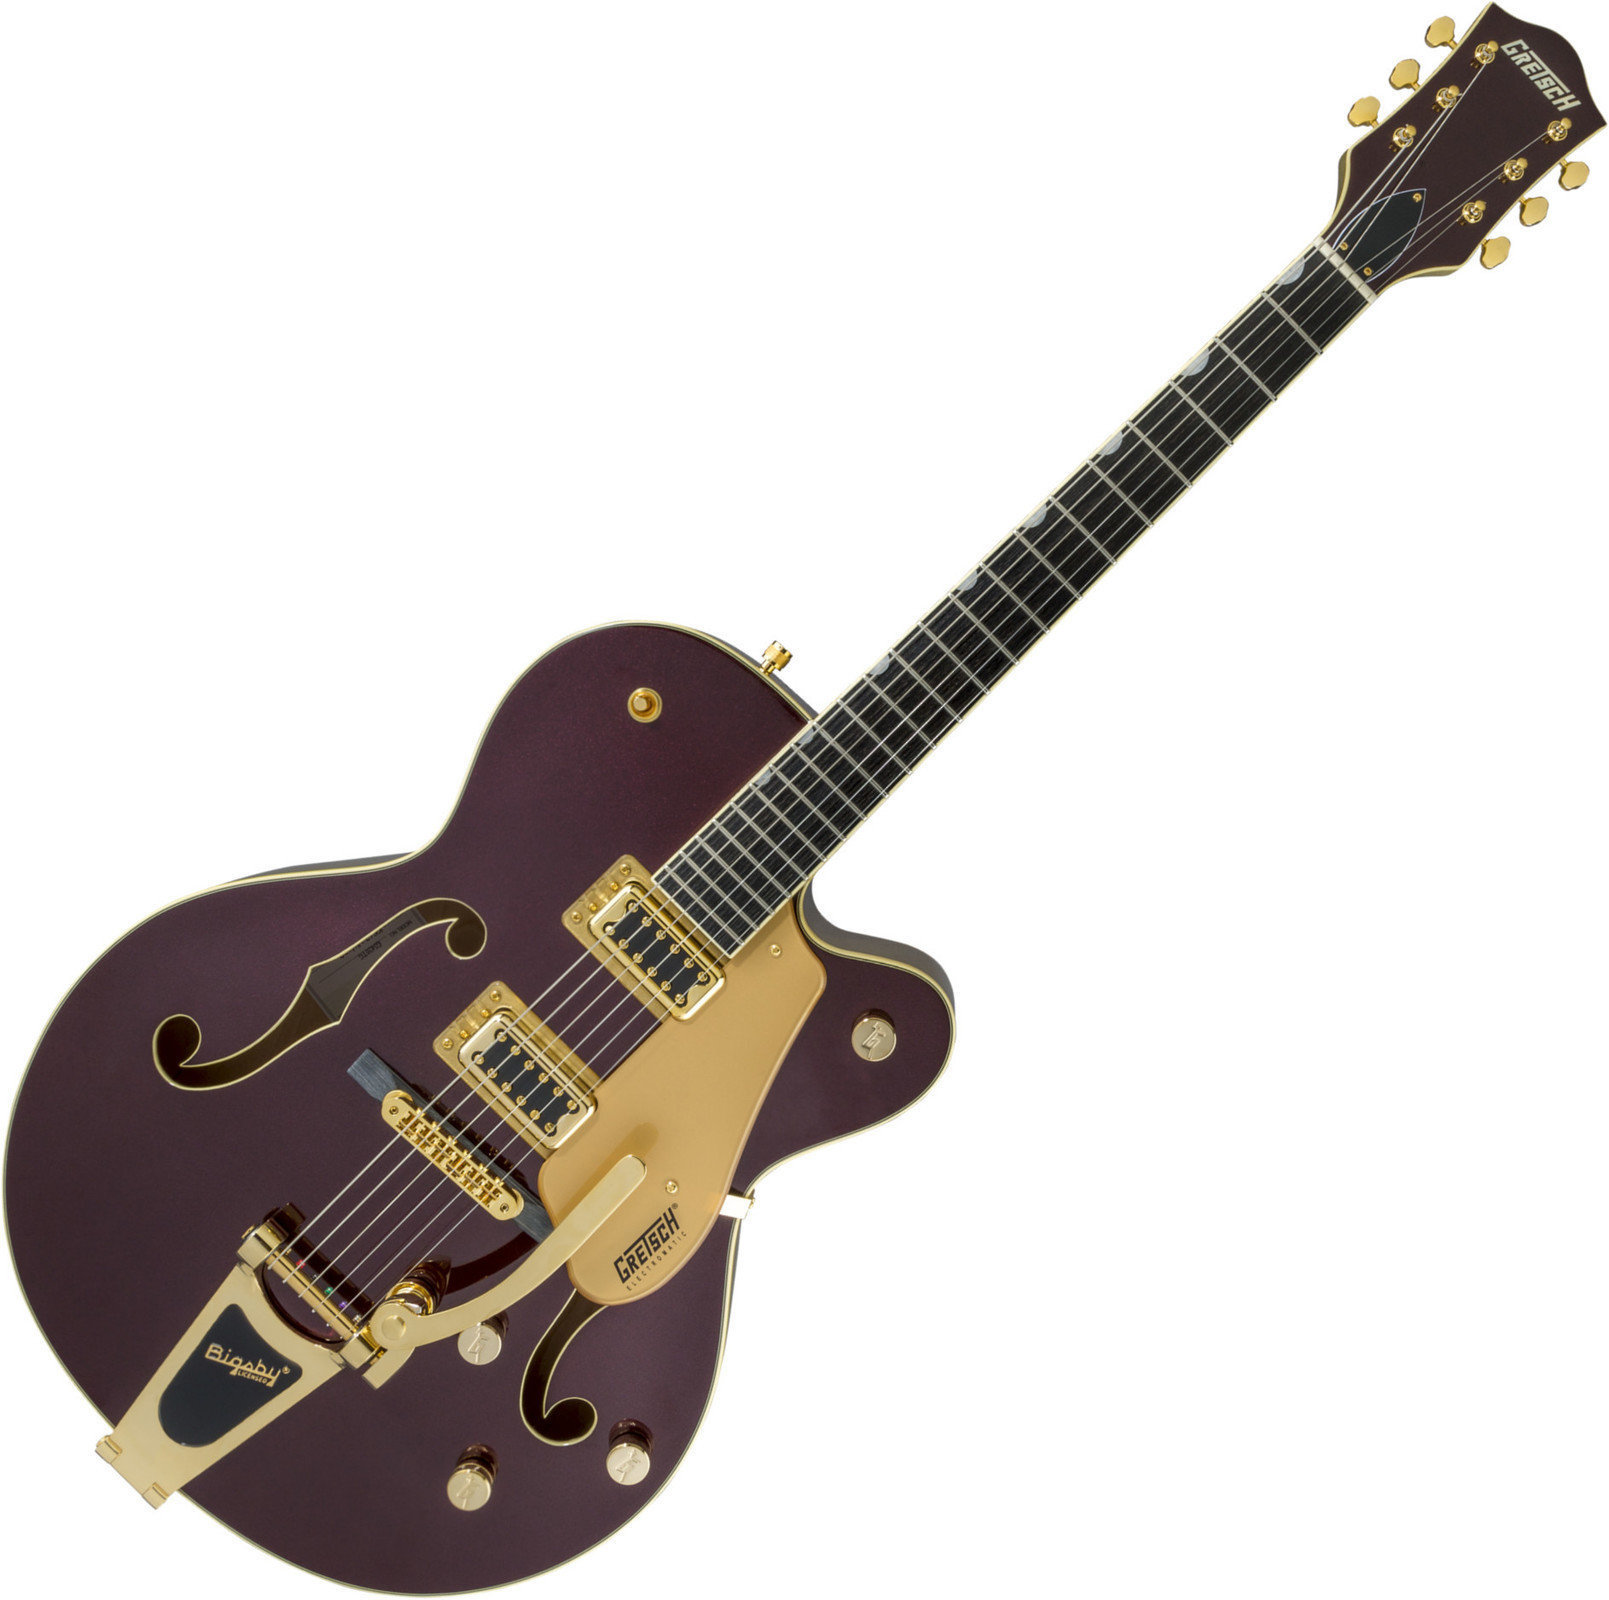 Semiakustická kytara Gretsch G5420TG Electromatic Hollow Body 135th Anniversary LTD